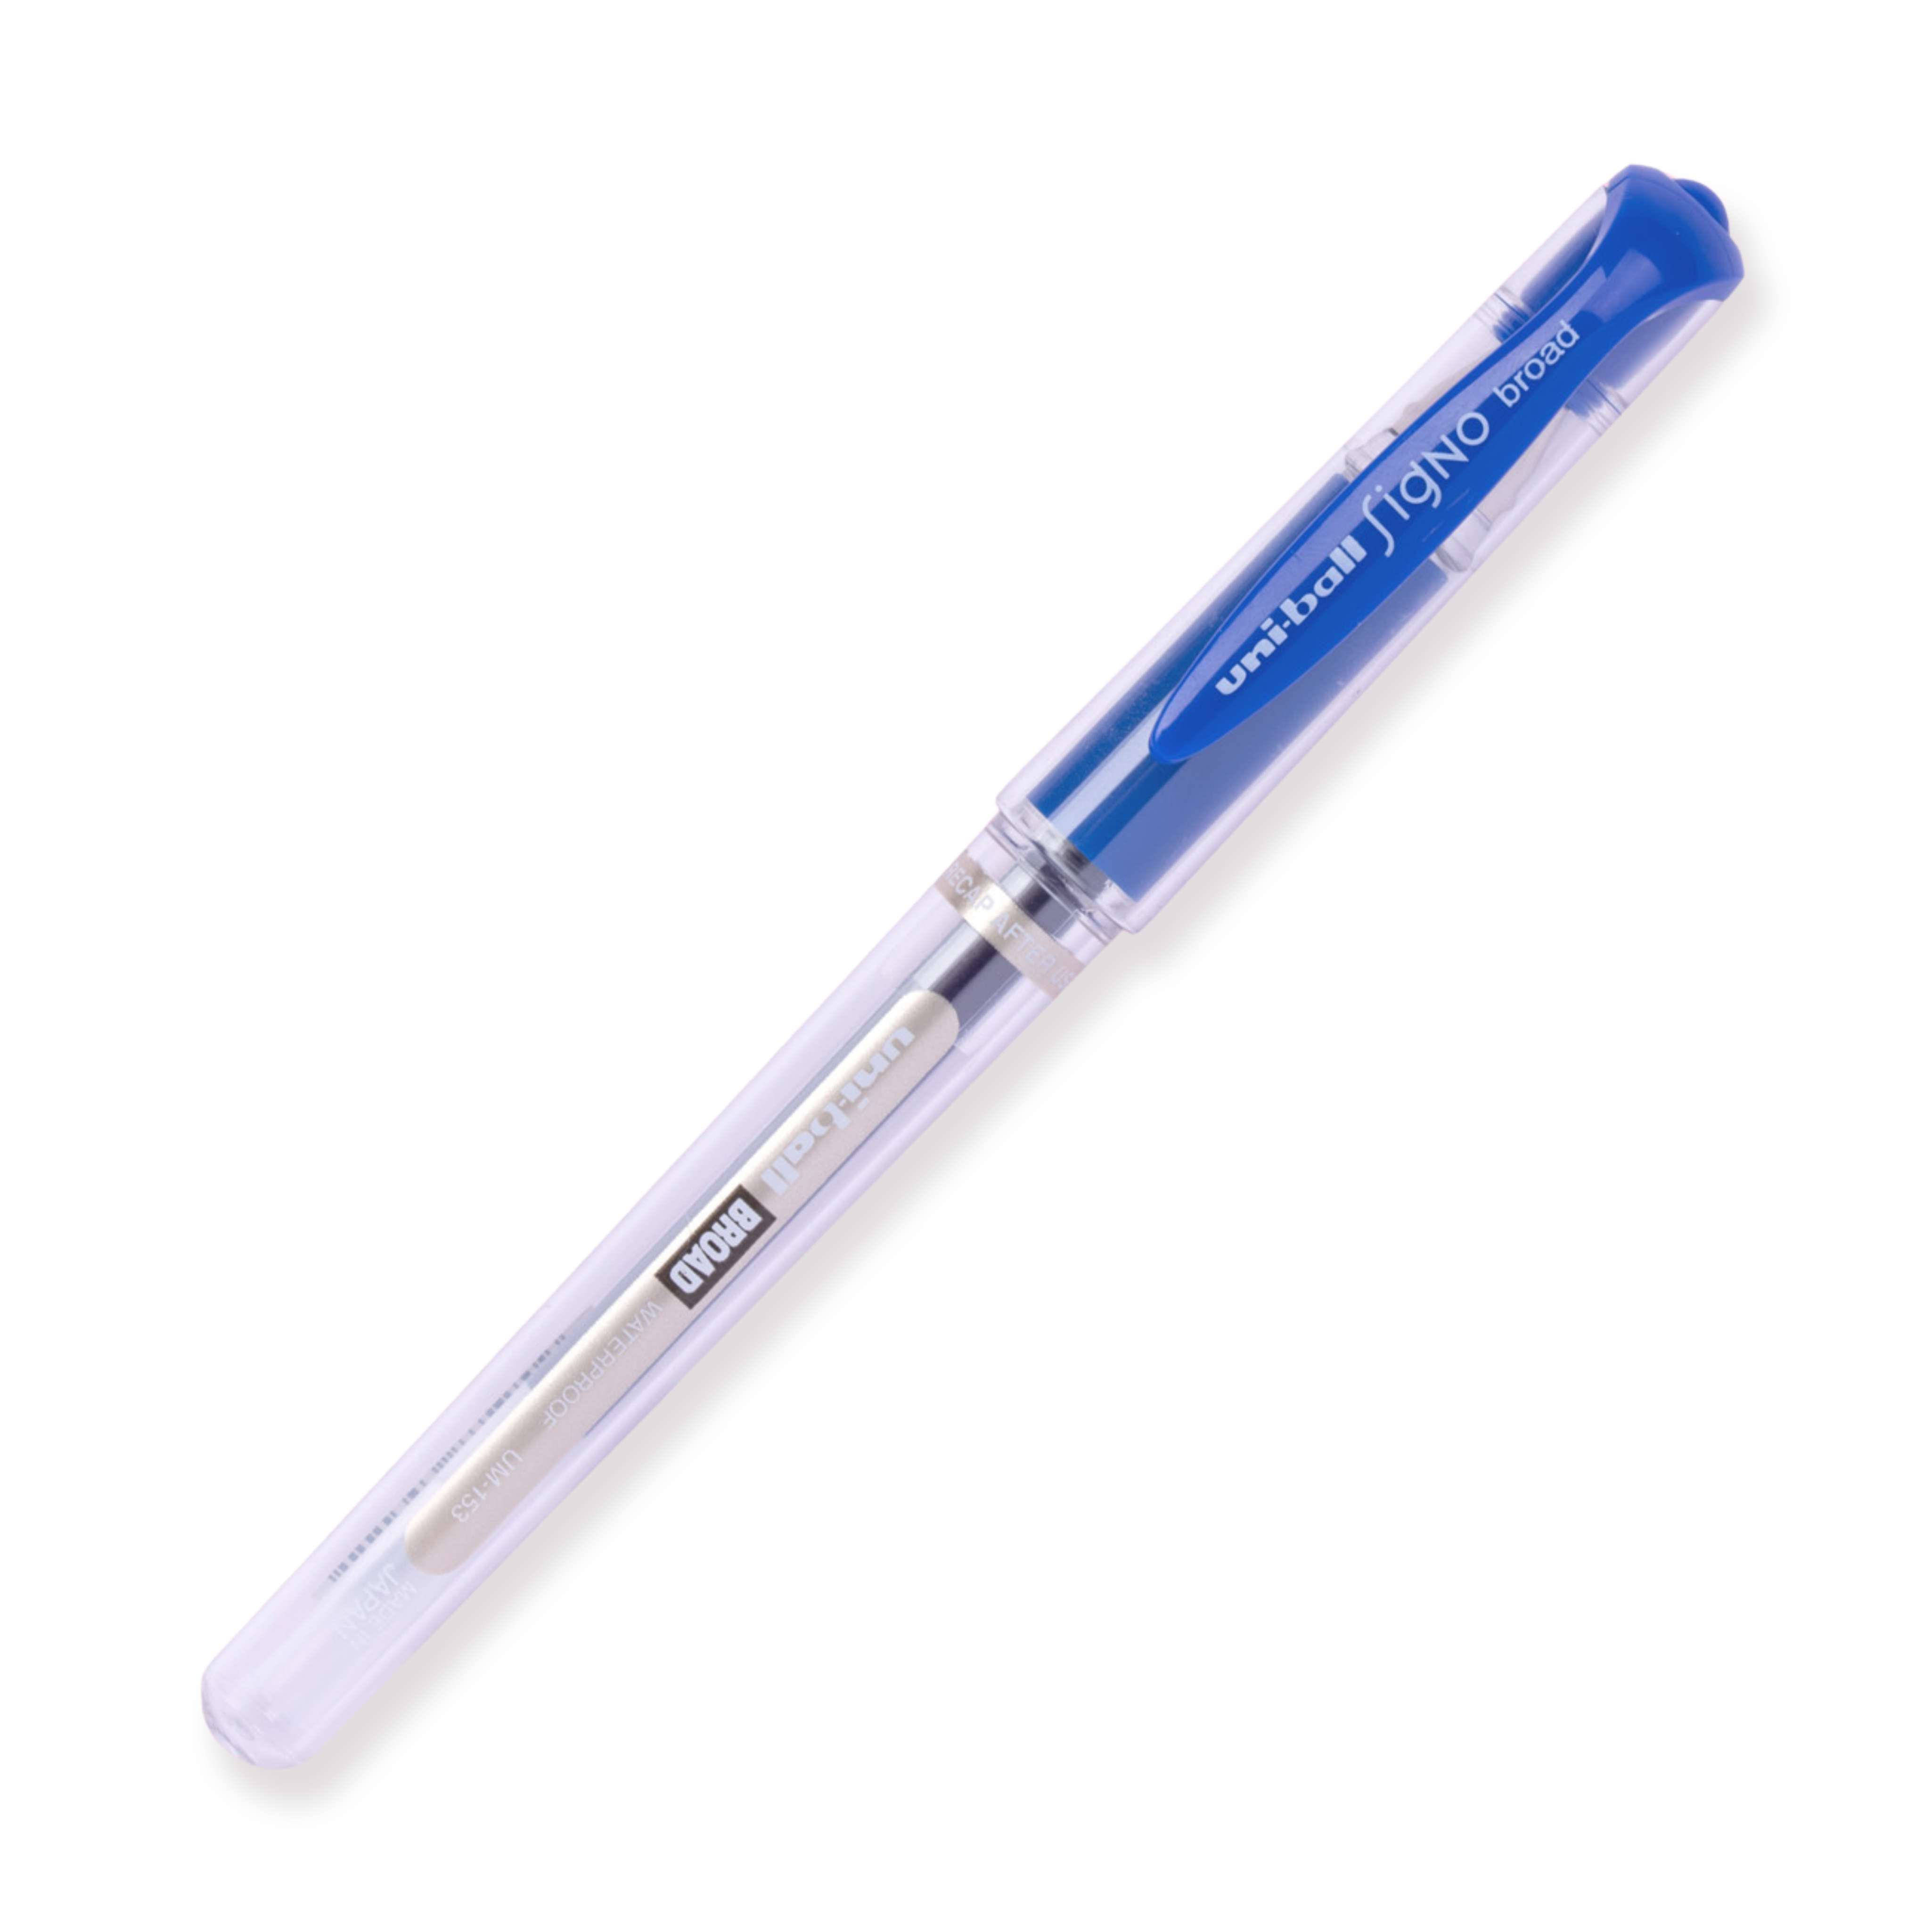 Bolígrafo de gel Uni-ball Signo Broad UM-153 - Tinta azul